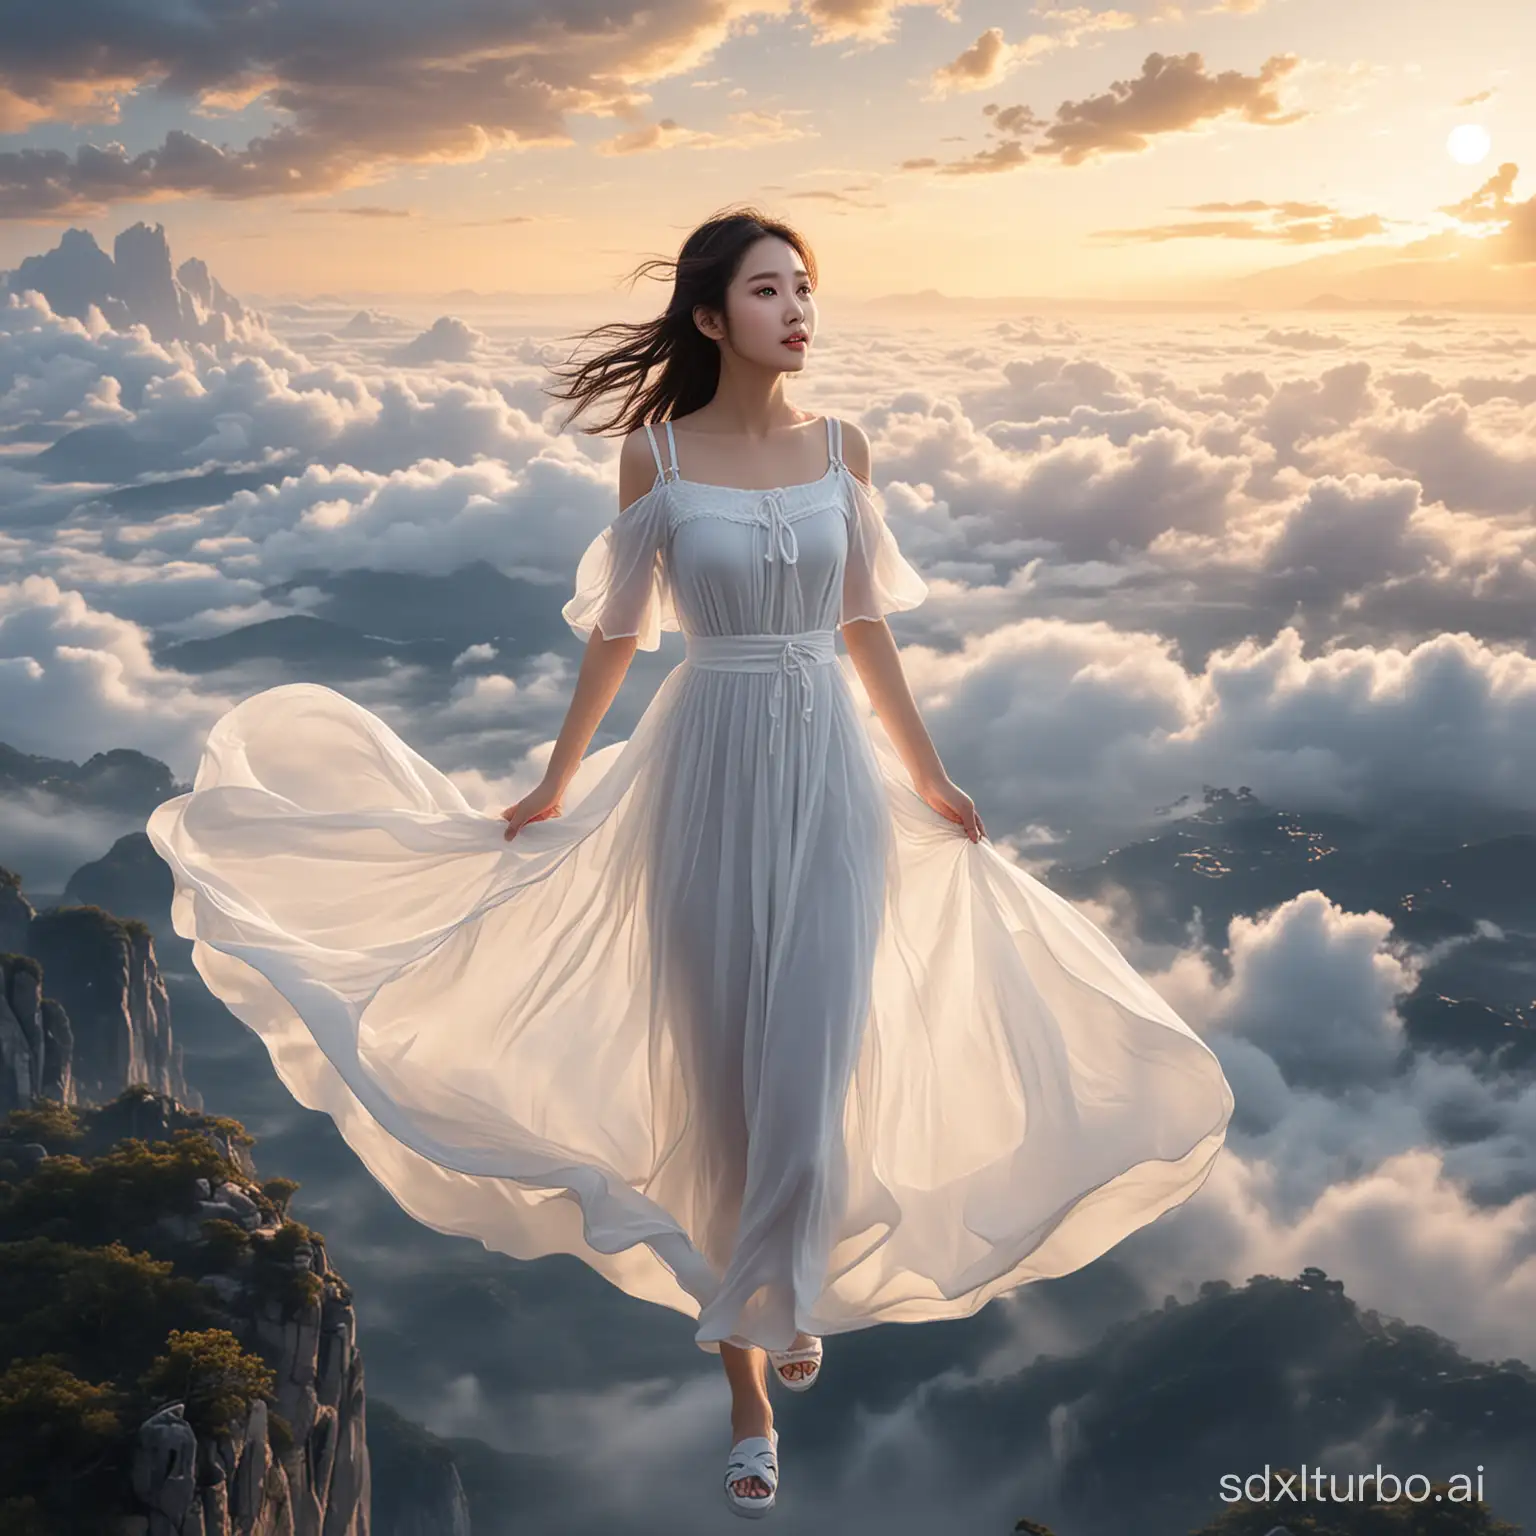 Chinese-Girl-in-White-Dress-Wandering-Skyward